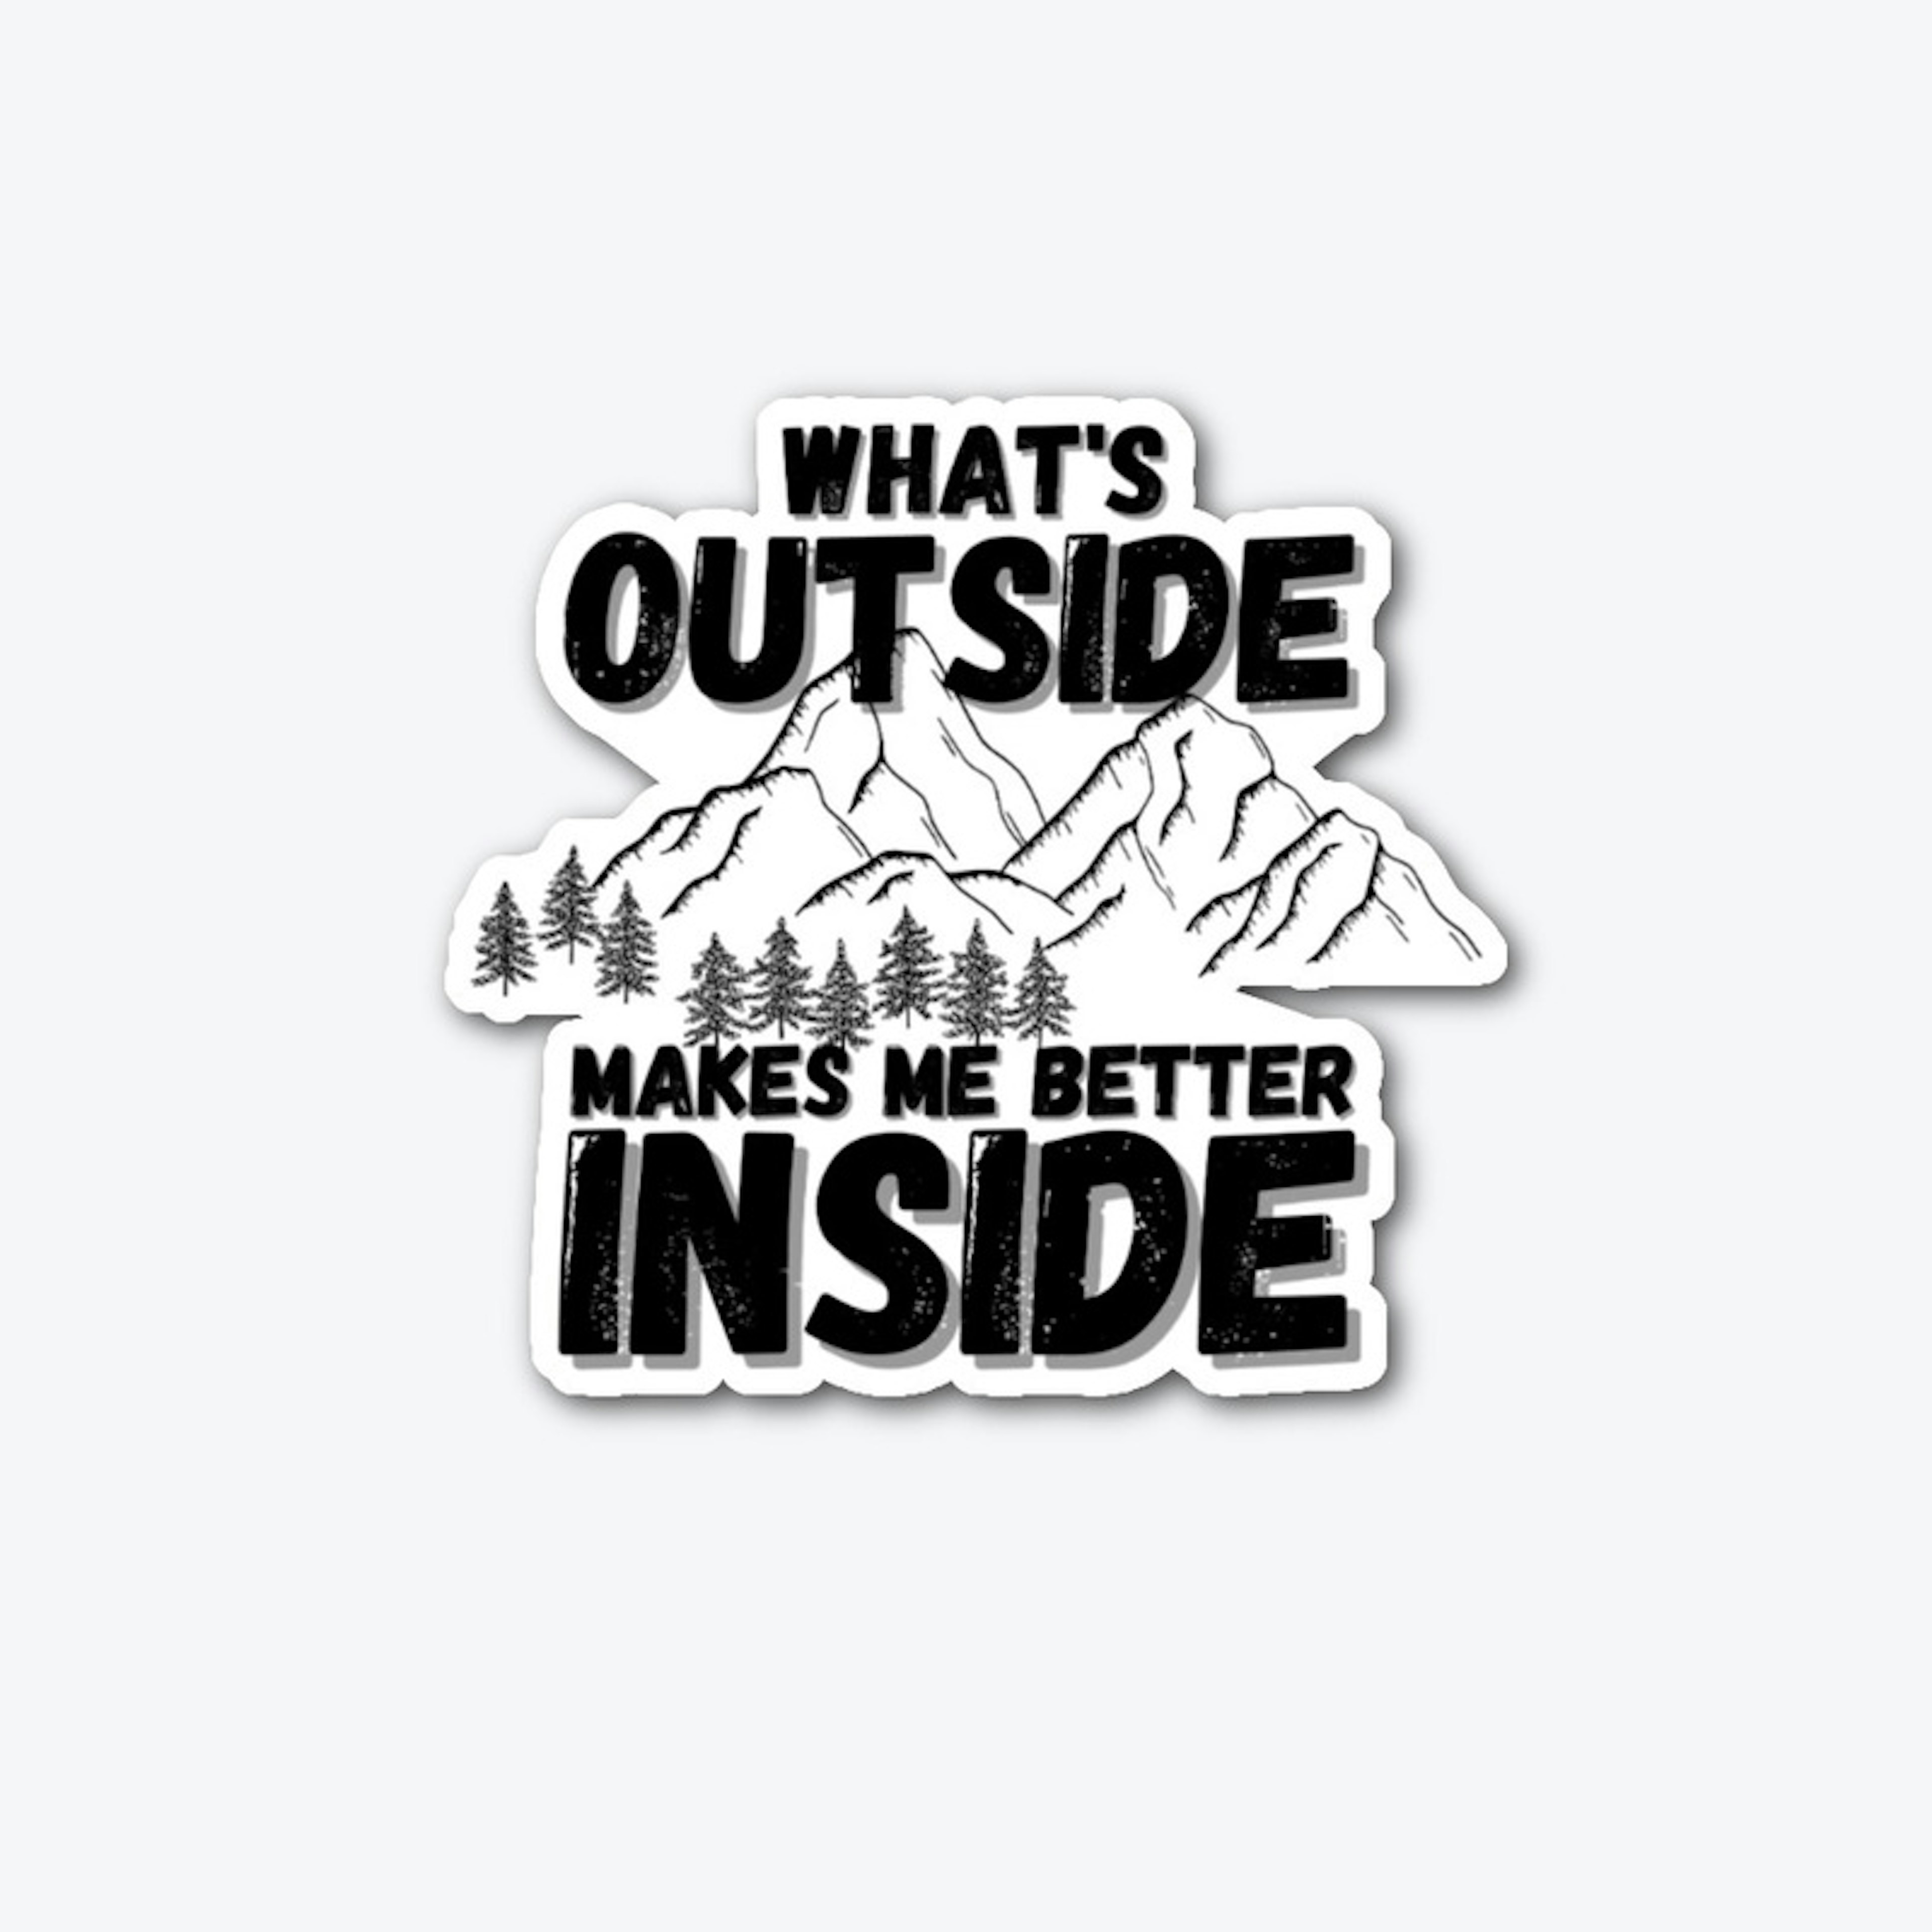 What's Outside Makes Me Better Inside!